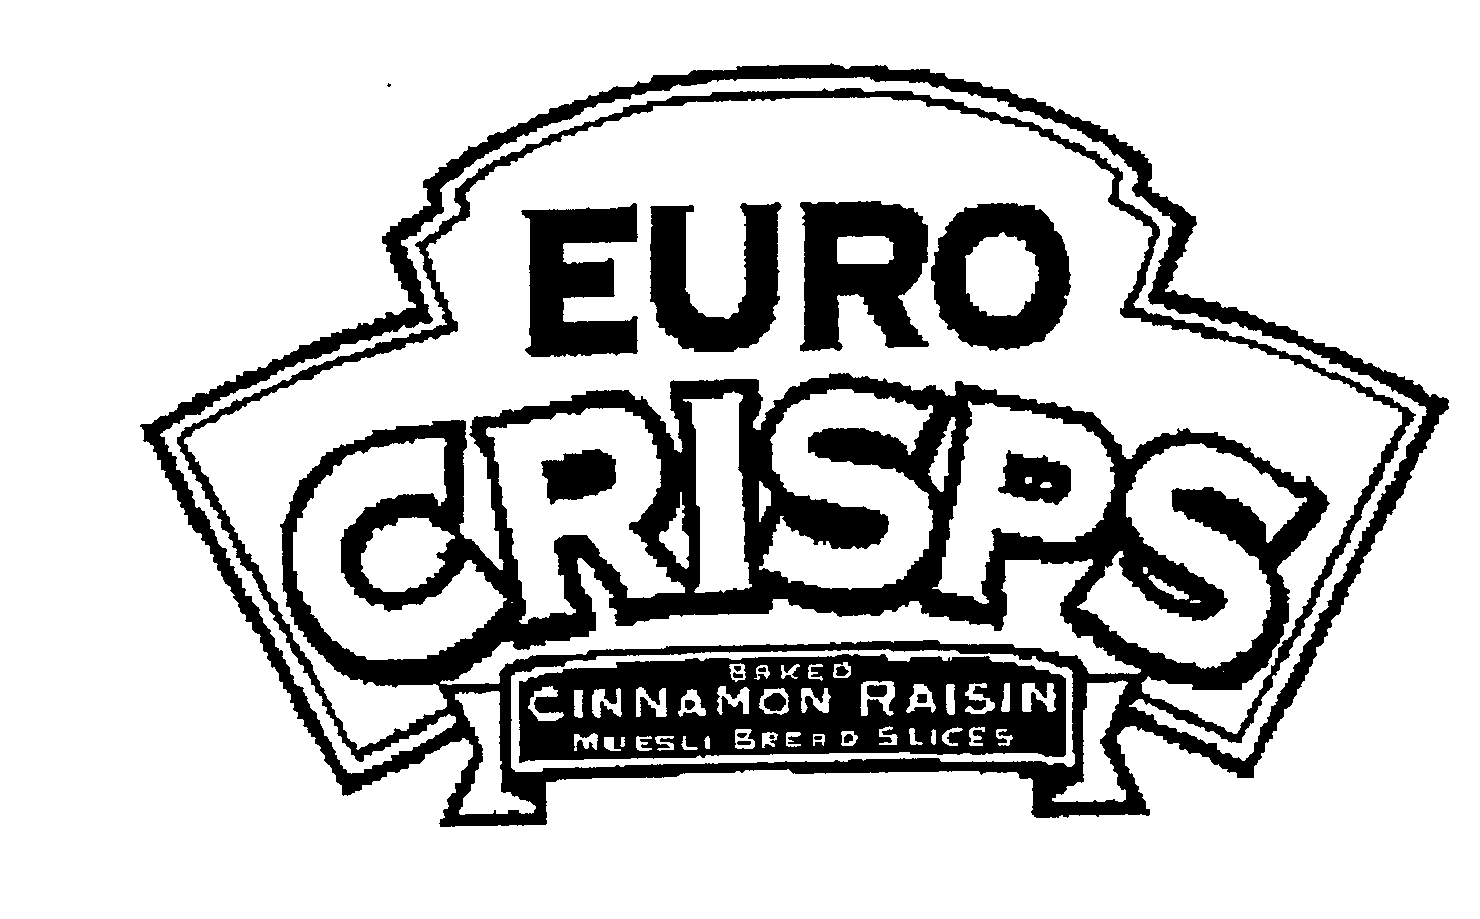  EURO CRISPS BAKED CINNAMON RAISIN MUESLI BREAD SLICES